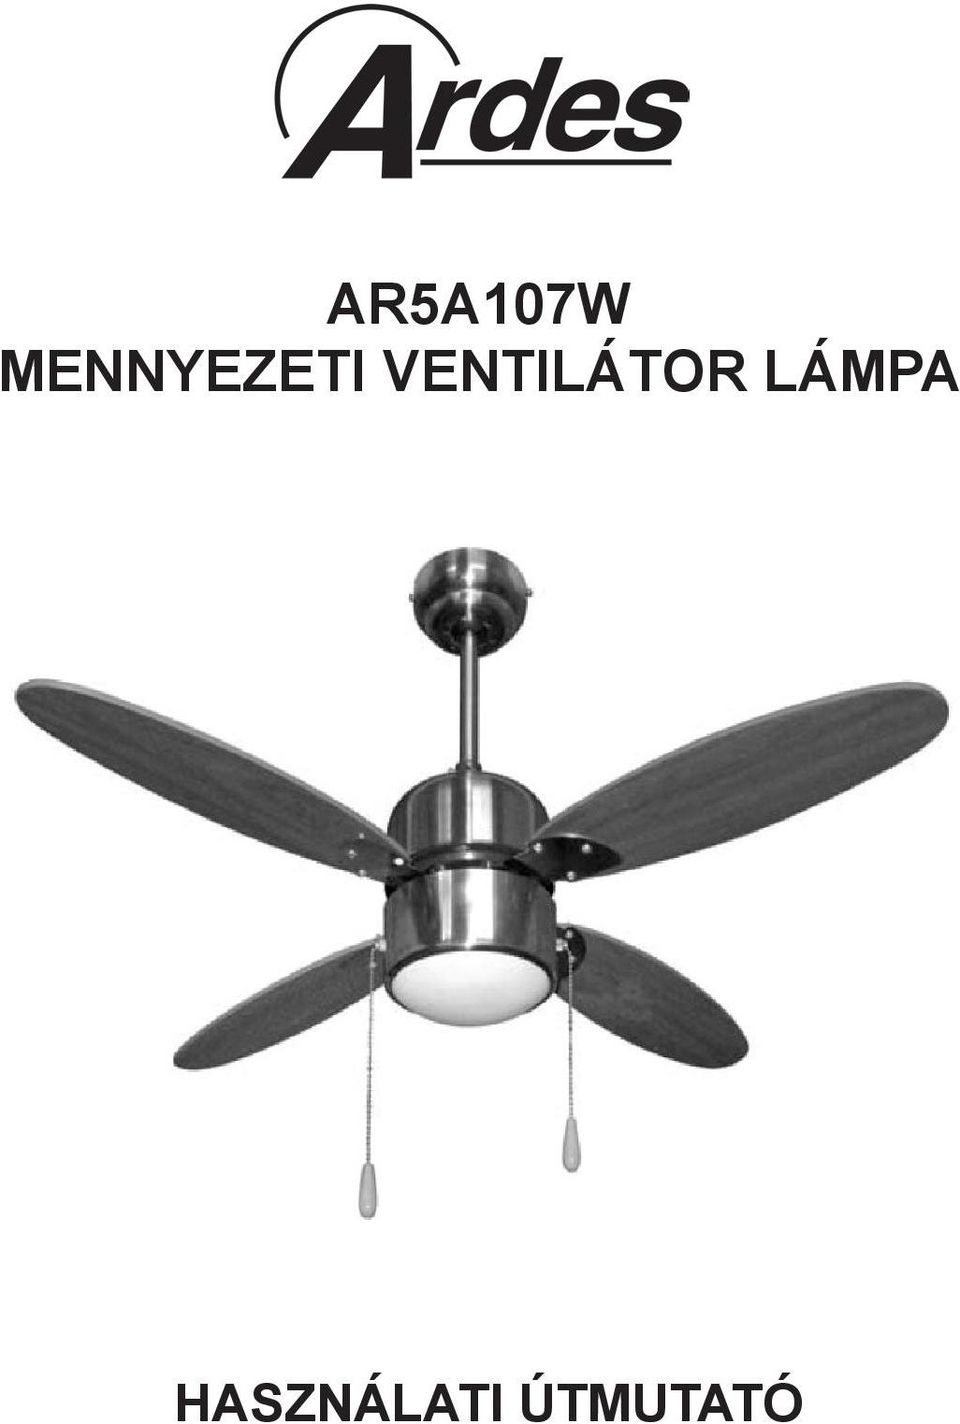 AR5A107W mennyezeti ventilátor lámpa - PDF Free Download